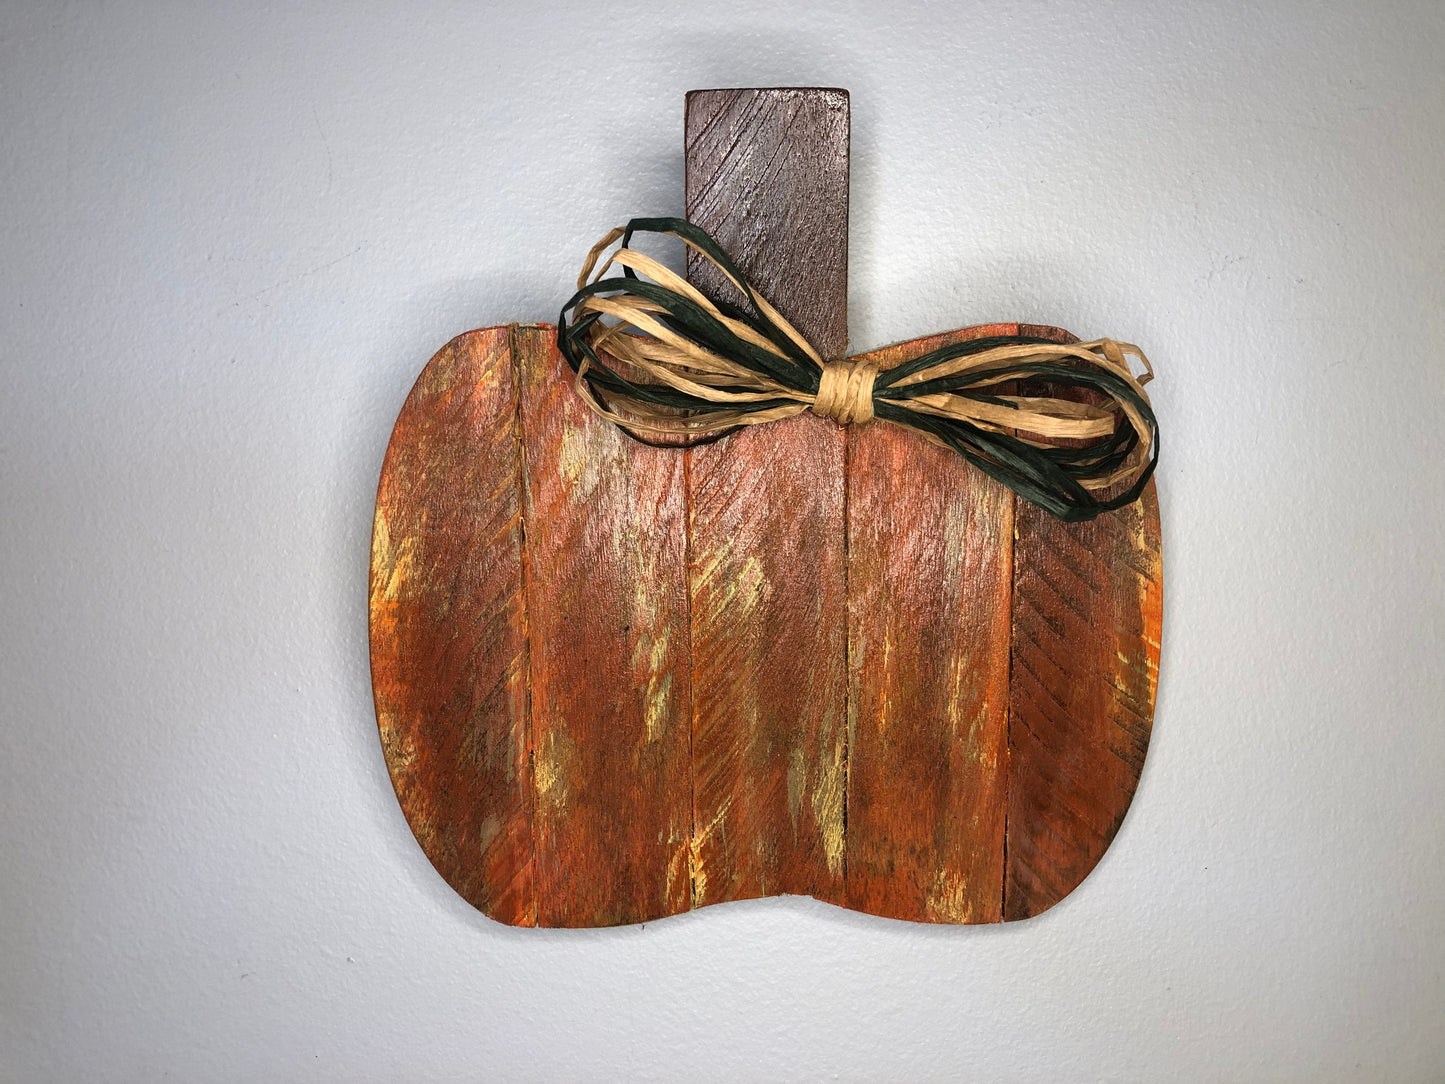 Layered Look with Bow Repurposed Lath Pumpkins Sassafras Originals